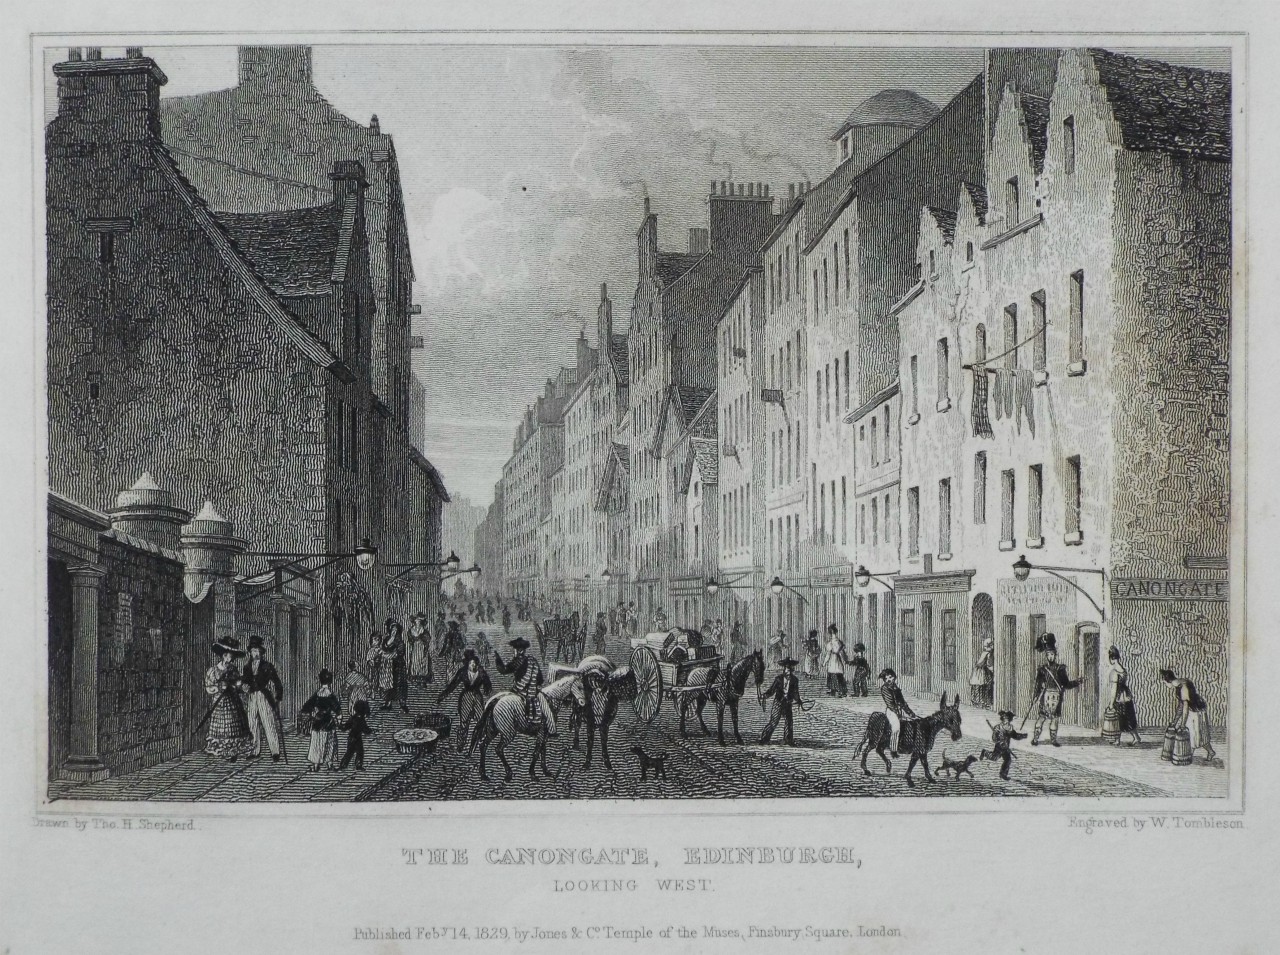 Print - The Canongate, Edinburgh, Looking West. - Tombleson